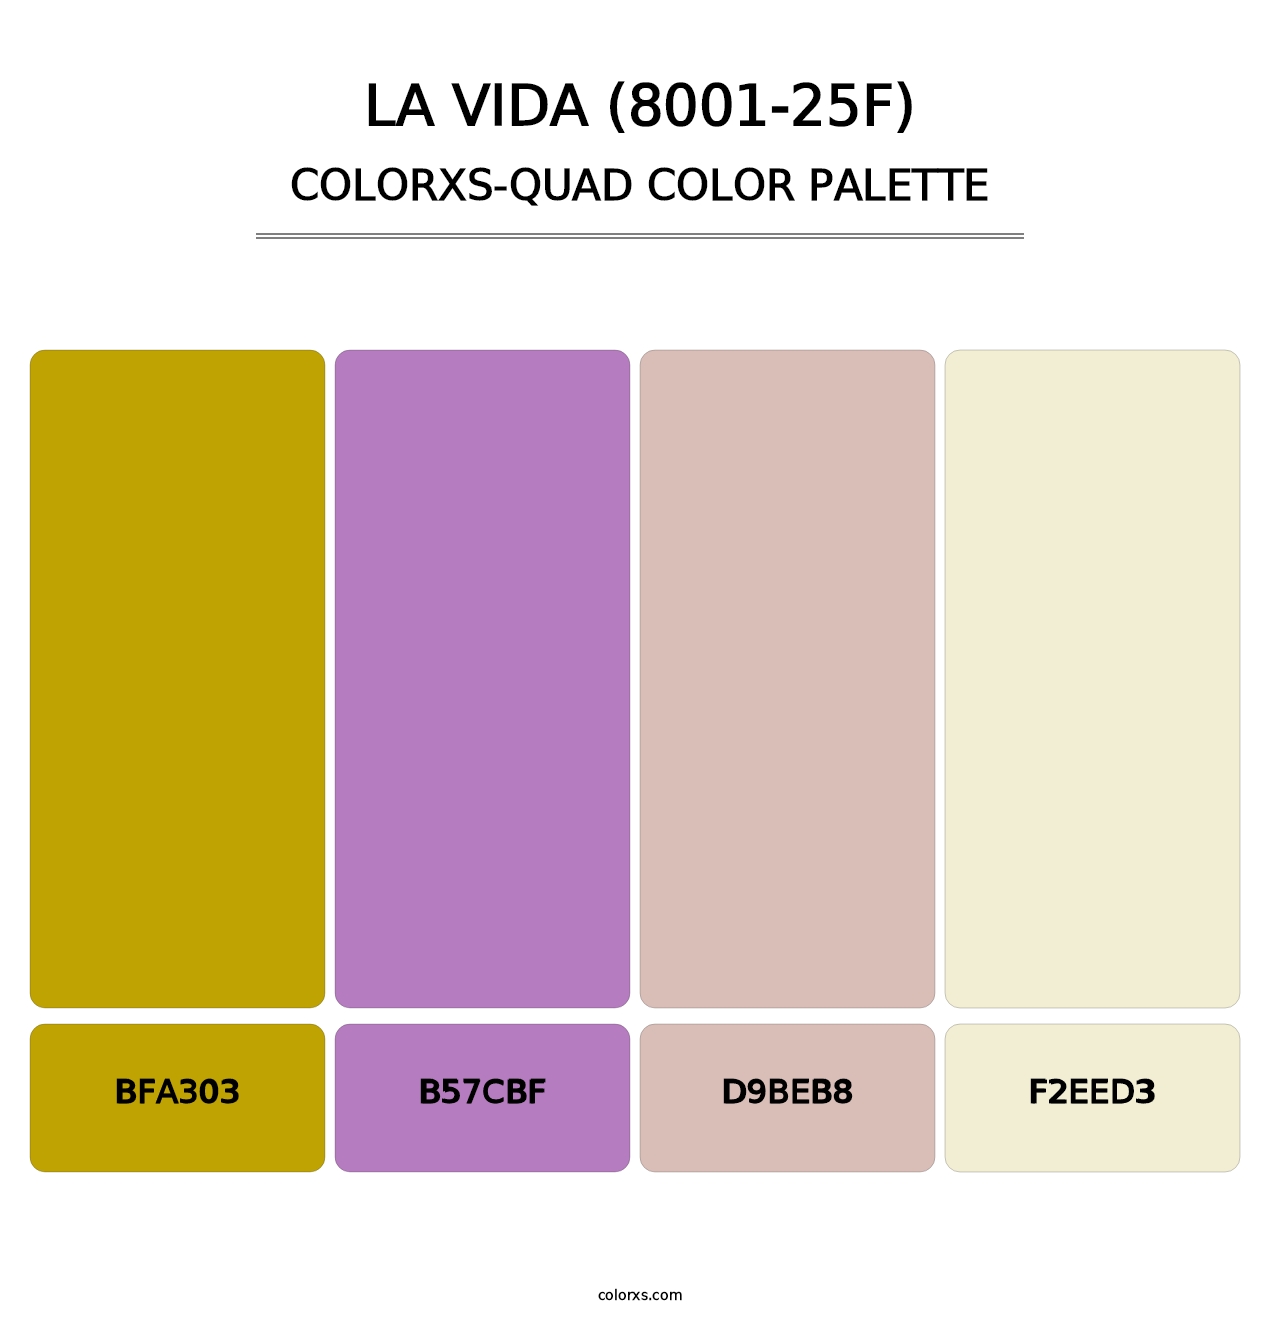 La Vida (8001-25F) - Colorxs Quad Palette